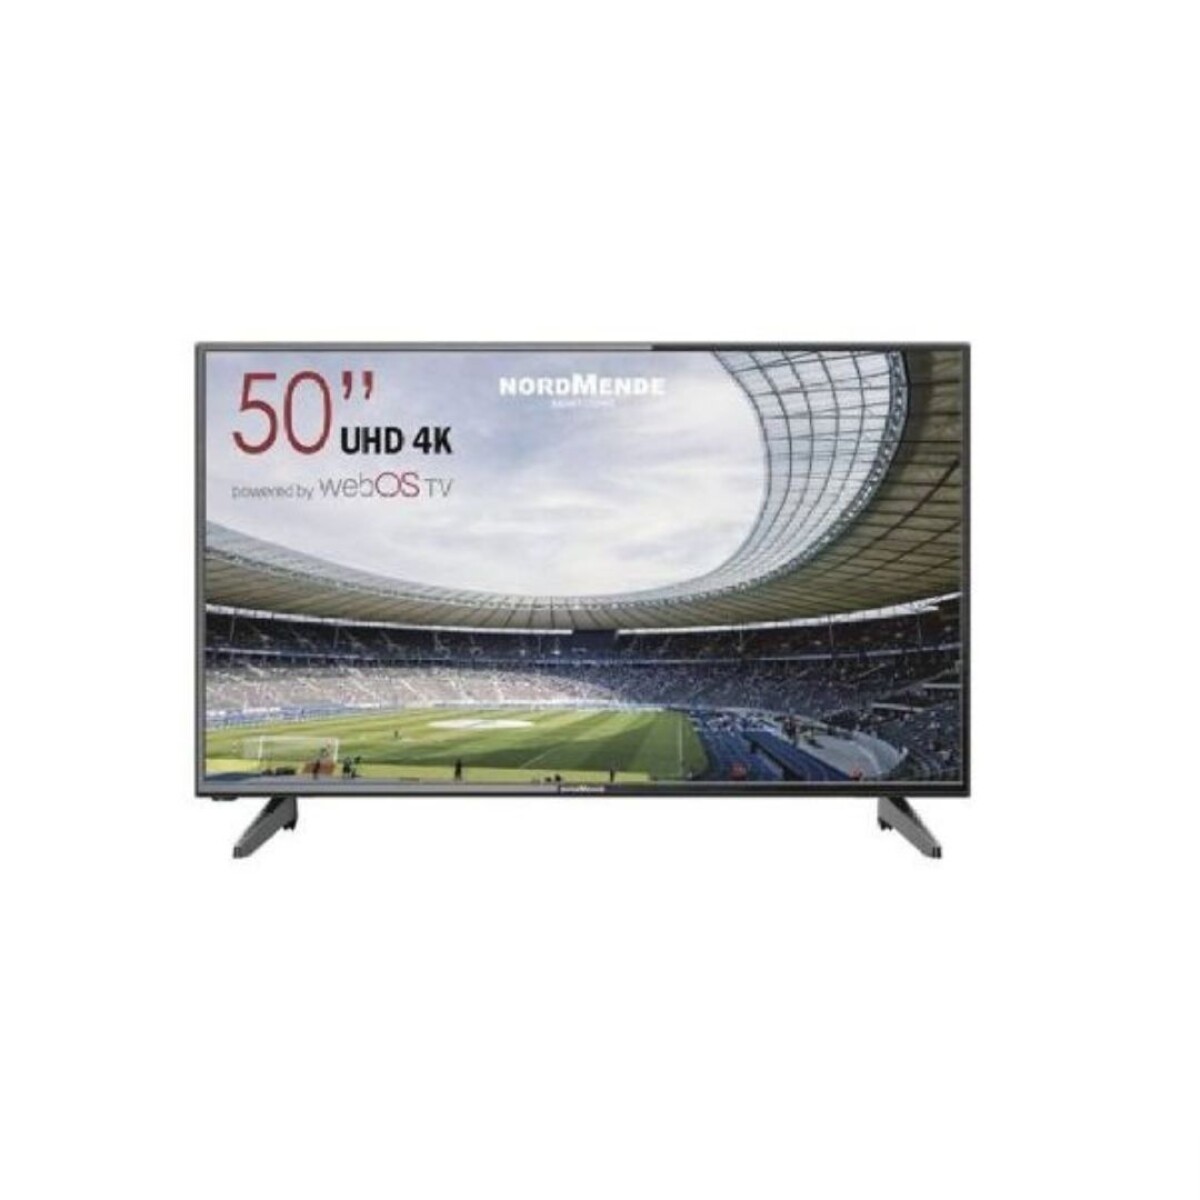 SMART TV NORDMENDE 50" 4K UHD ISDB-T - 001 